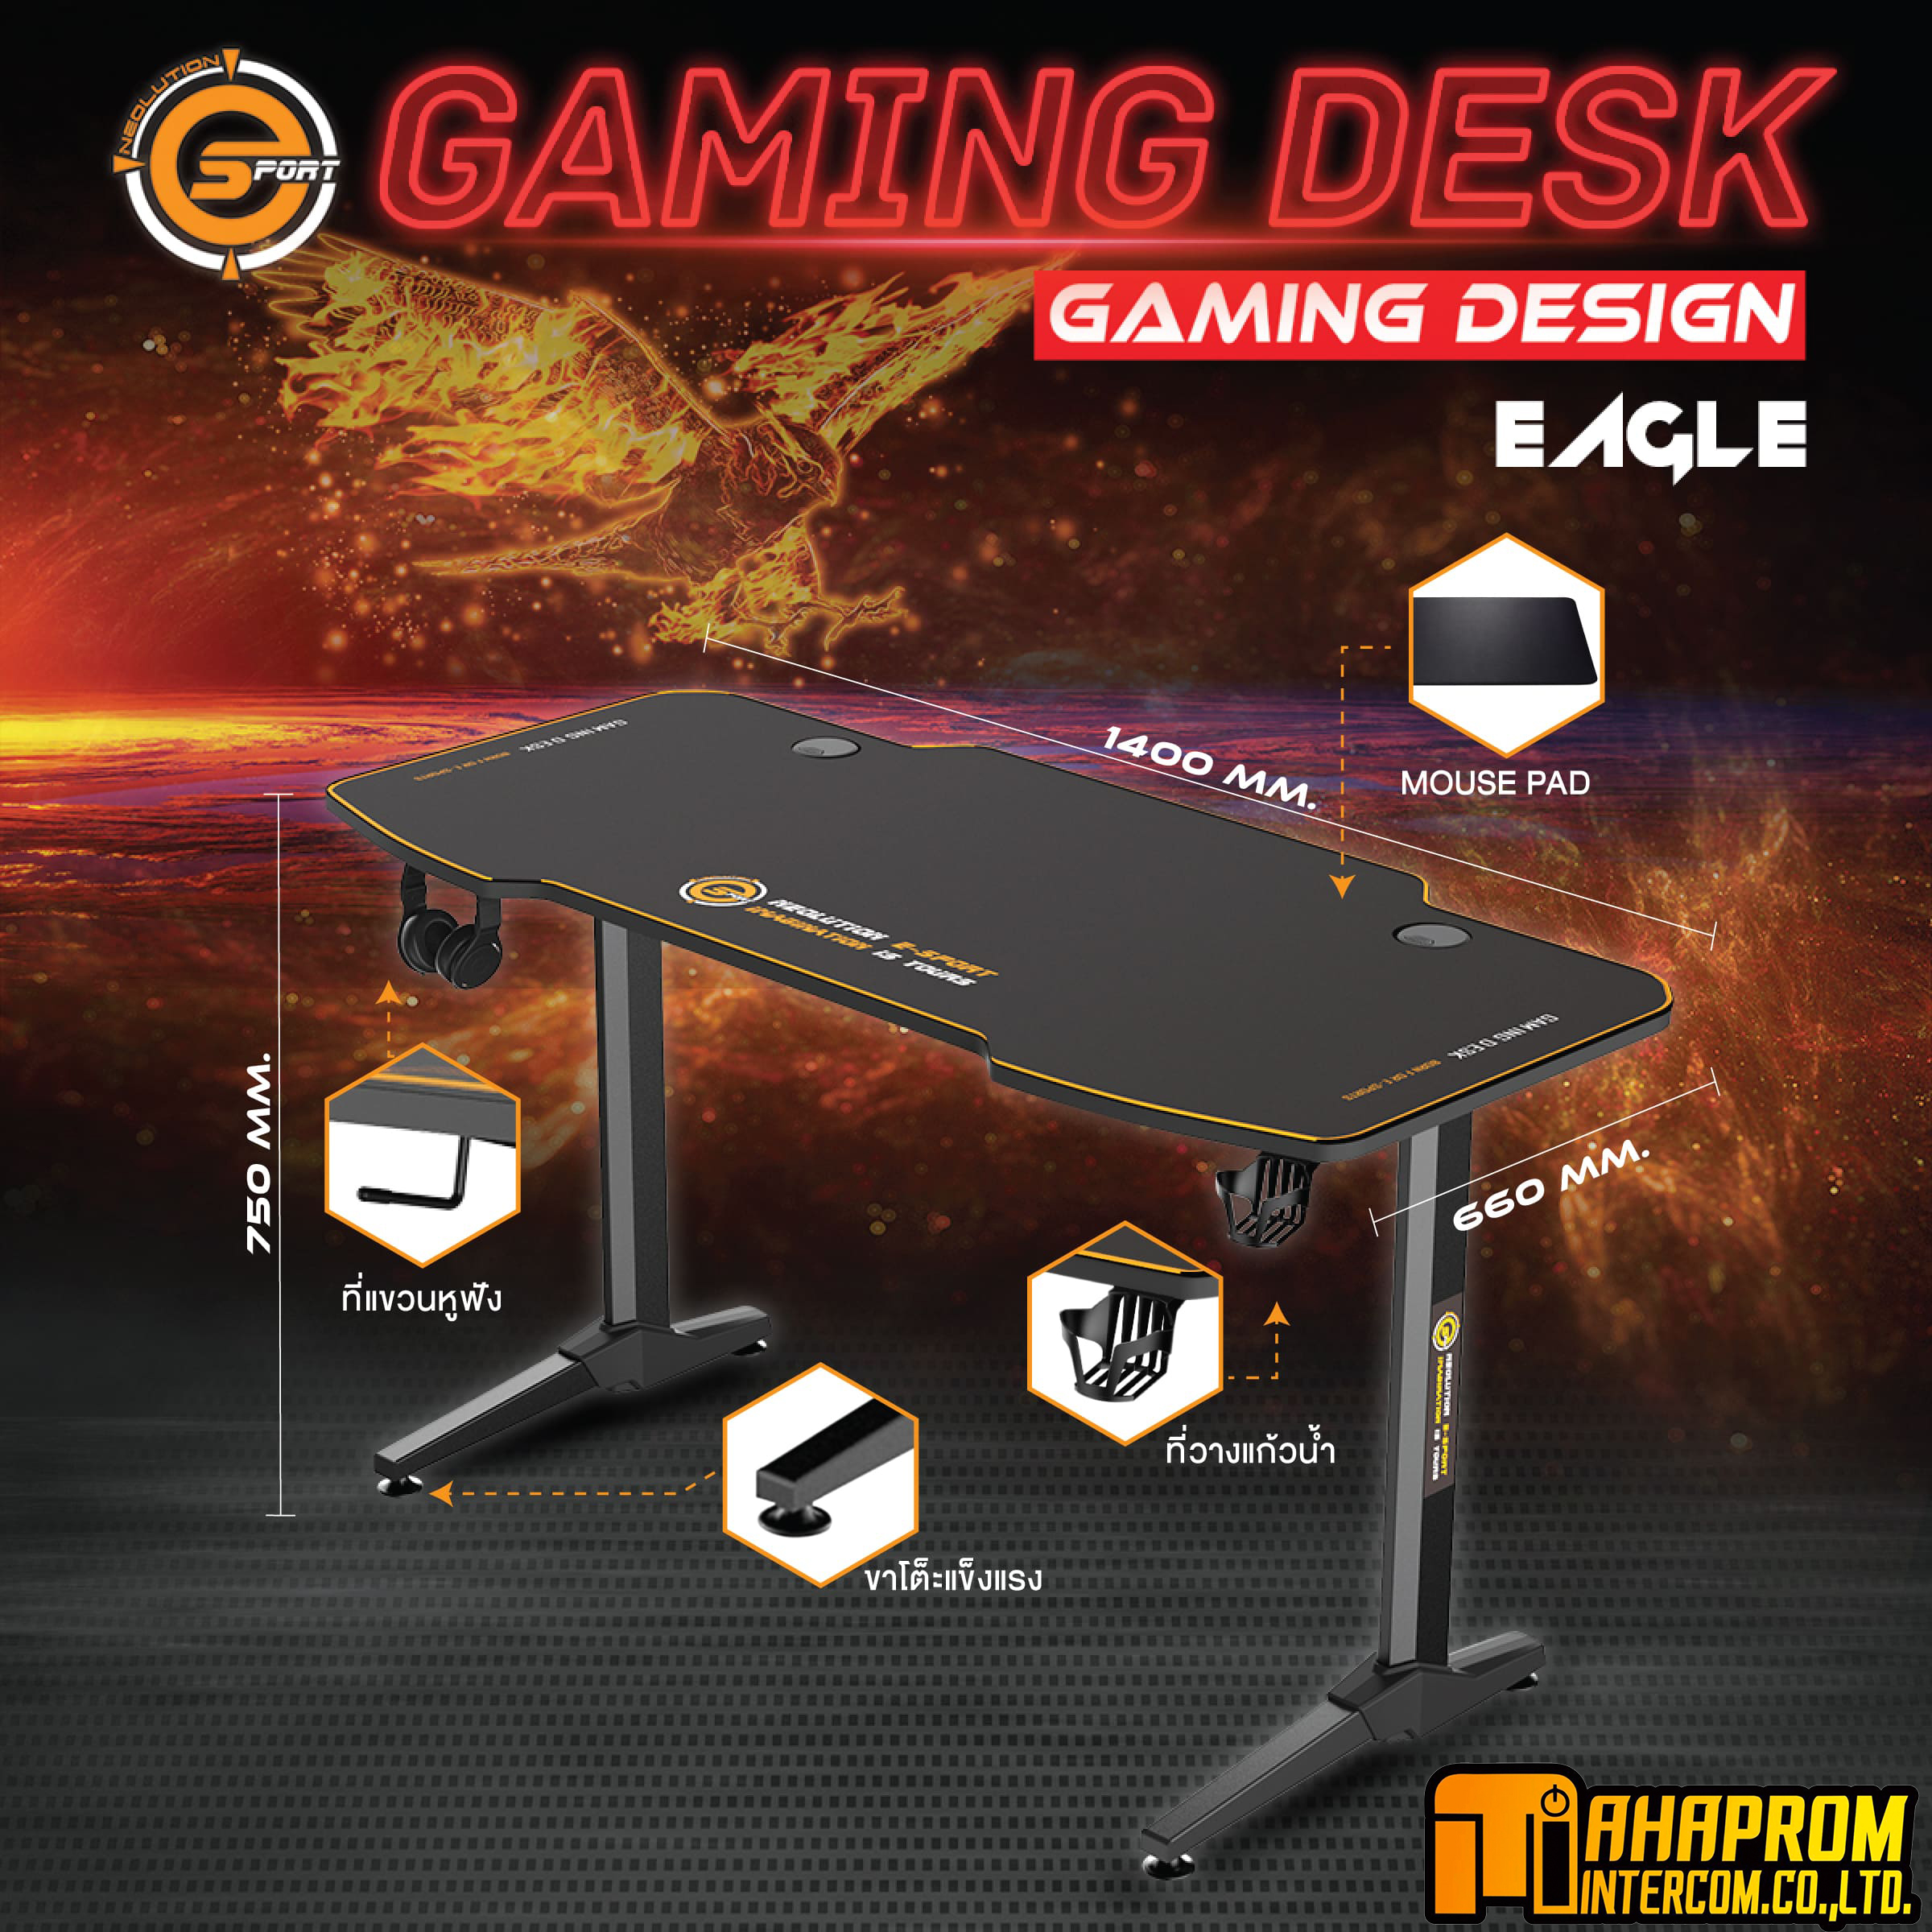 Neolution E-Sport Gaming Desk Eagle (รับประกัน 1 ปี)